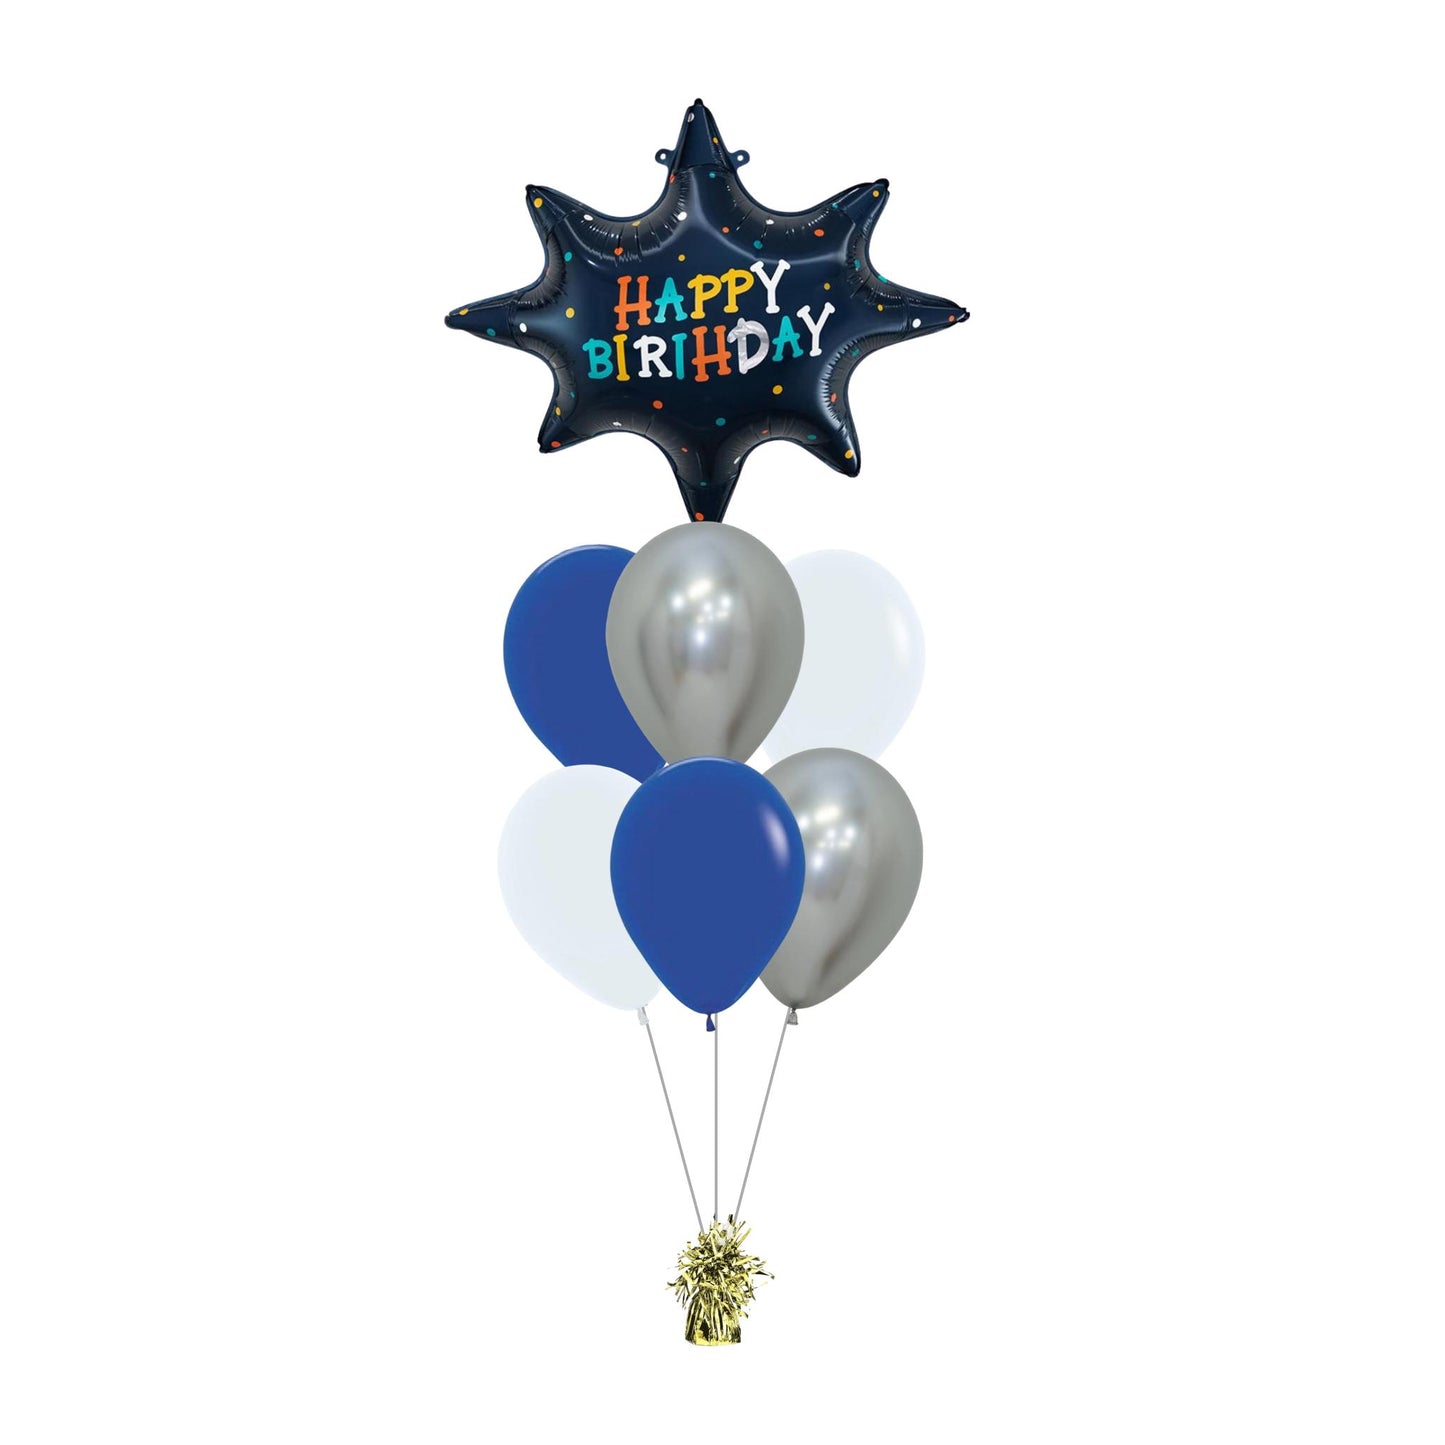 27 inch helium filled happy birthday foil balloon